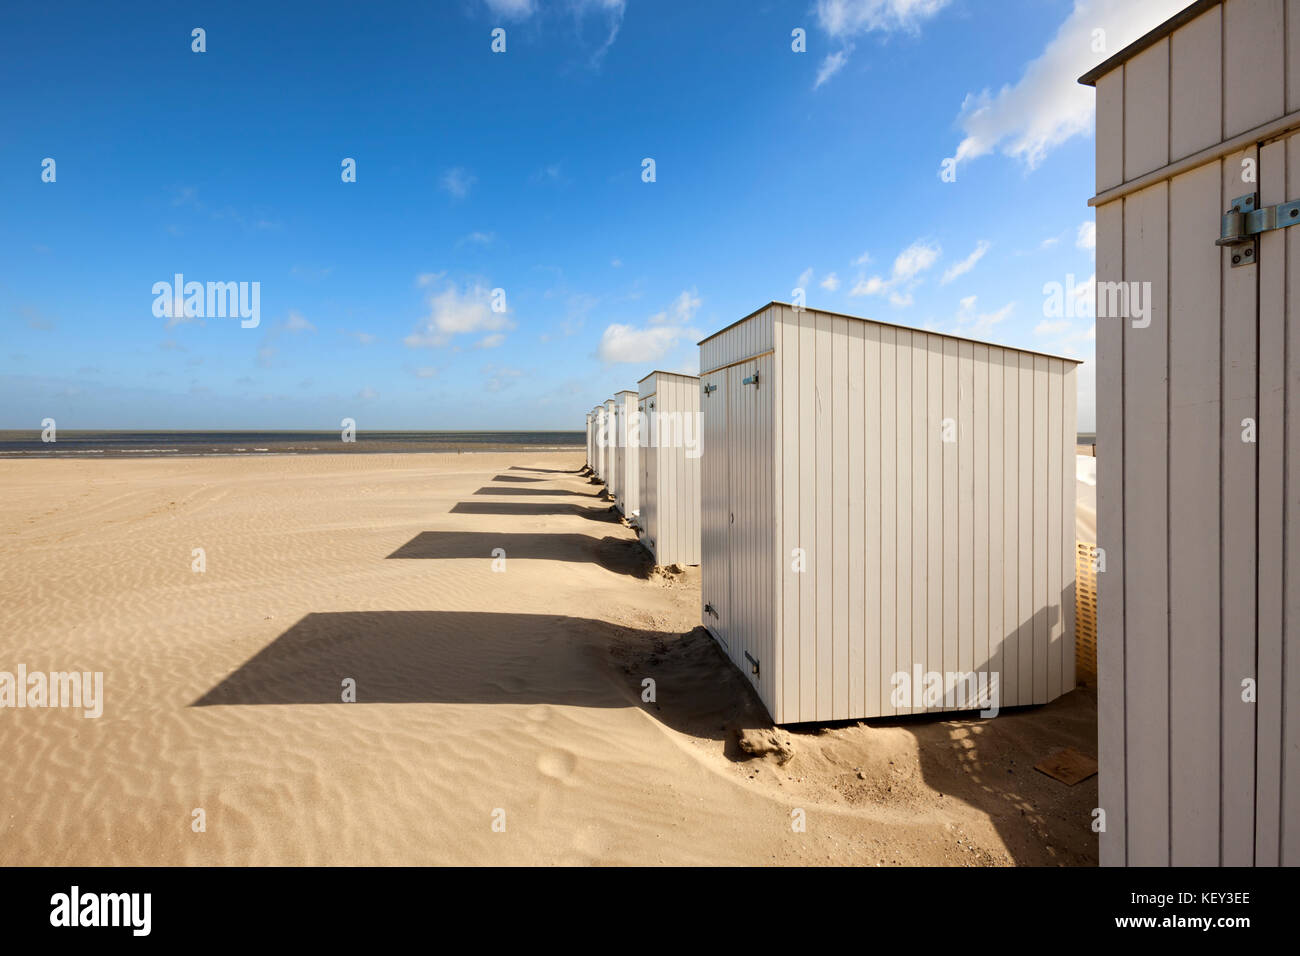 Kabinen am Strand von Knokke - Heist, belgische Nordsee Küste Stockfoto